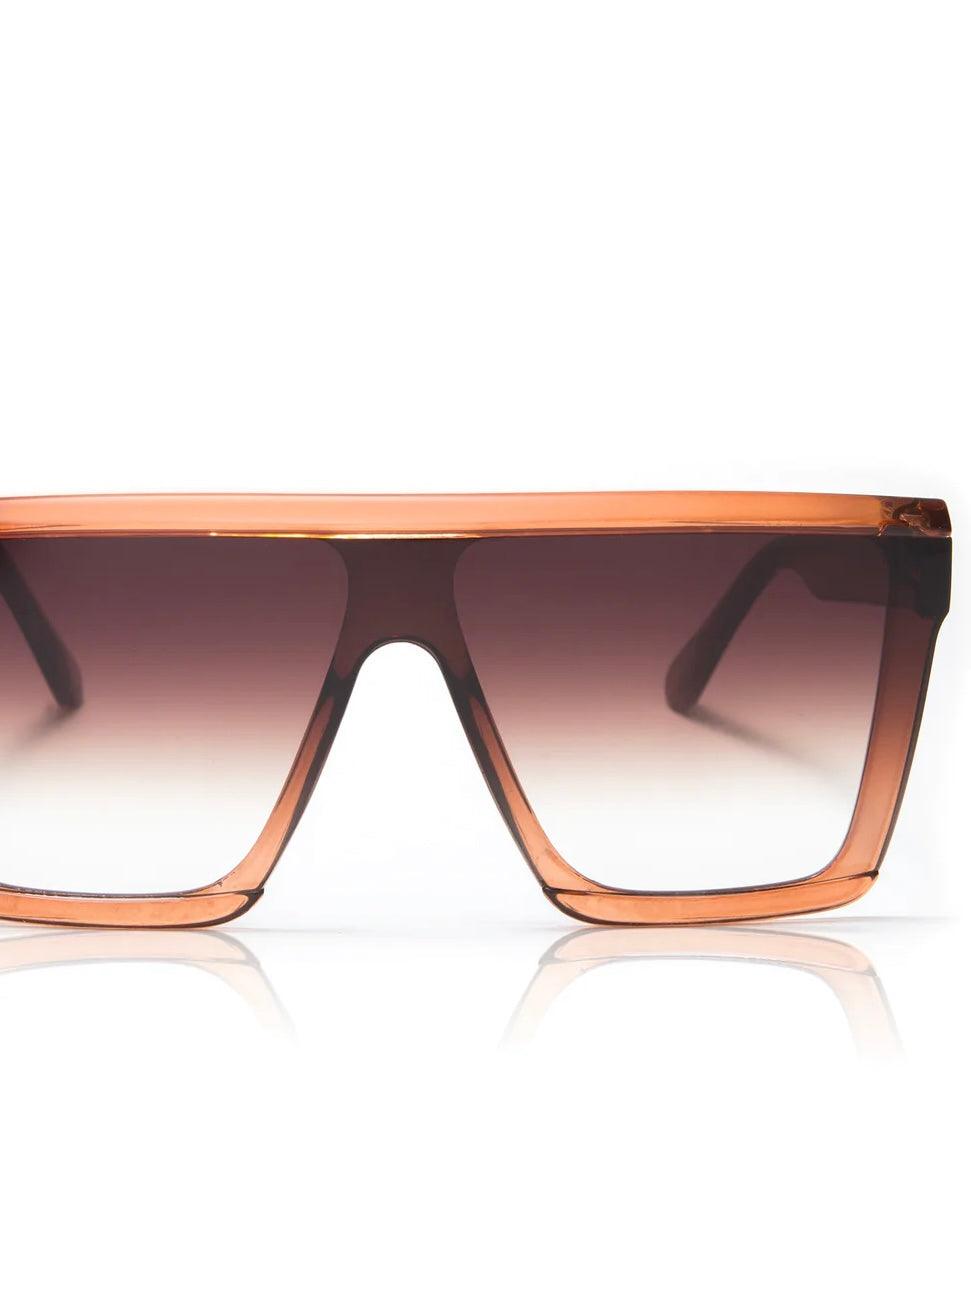 Unlocked Polarized Sunglasses - Alden+Rose LLC 